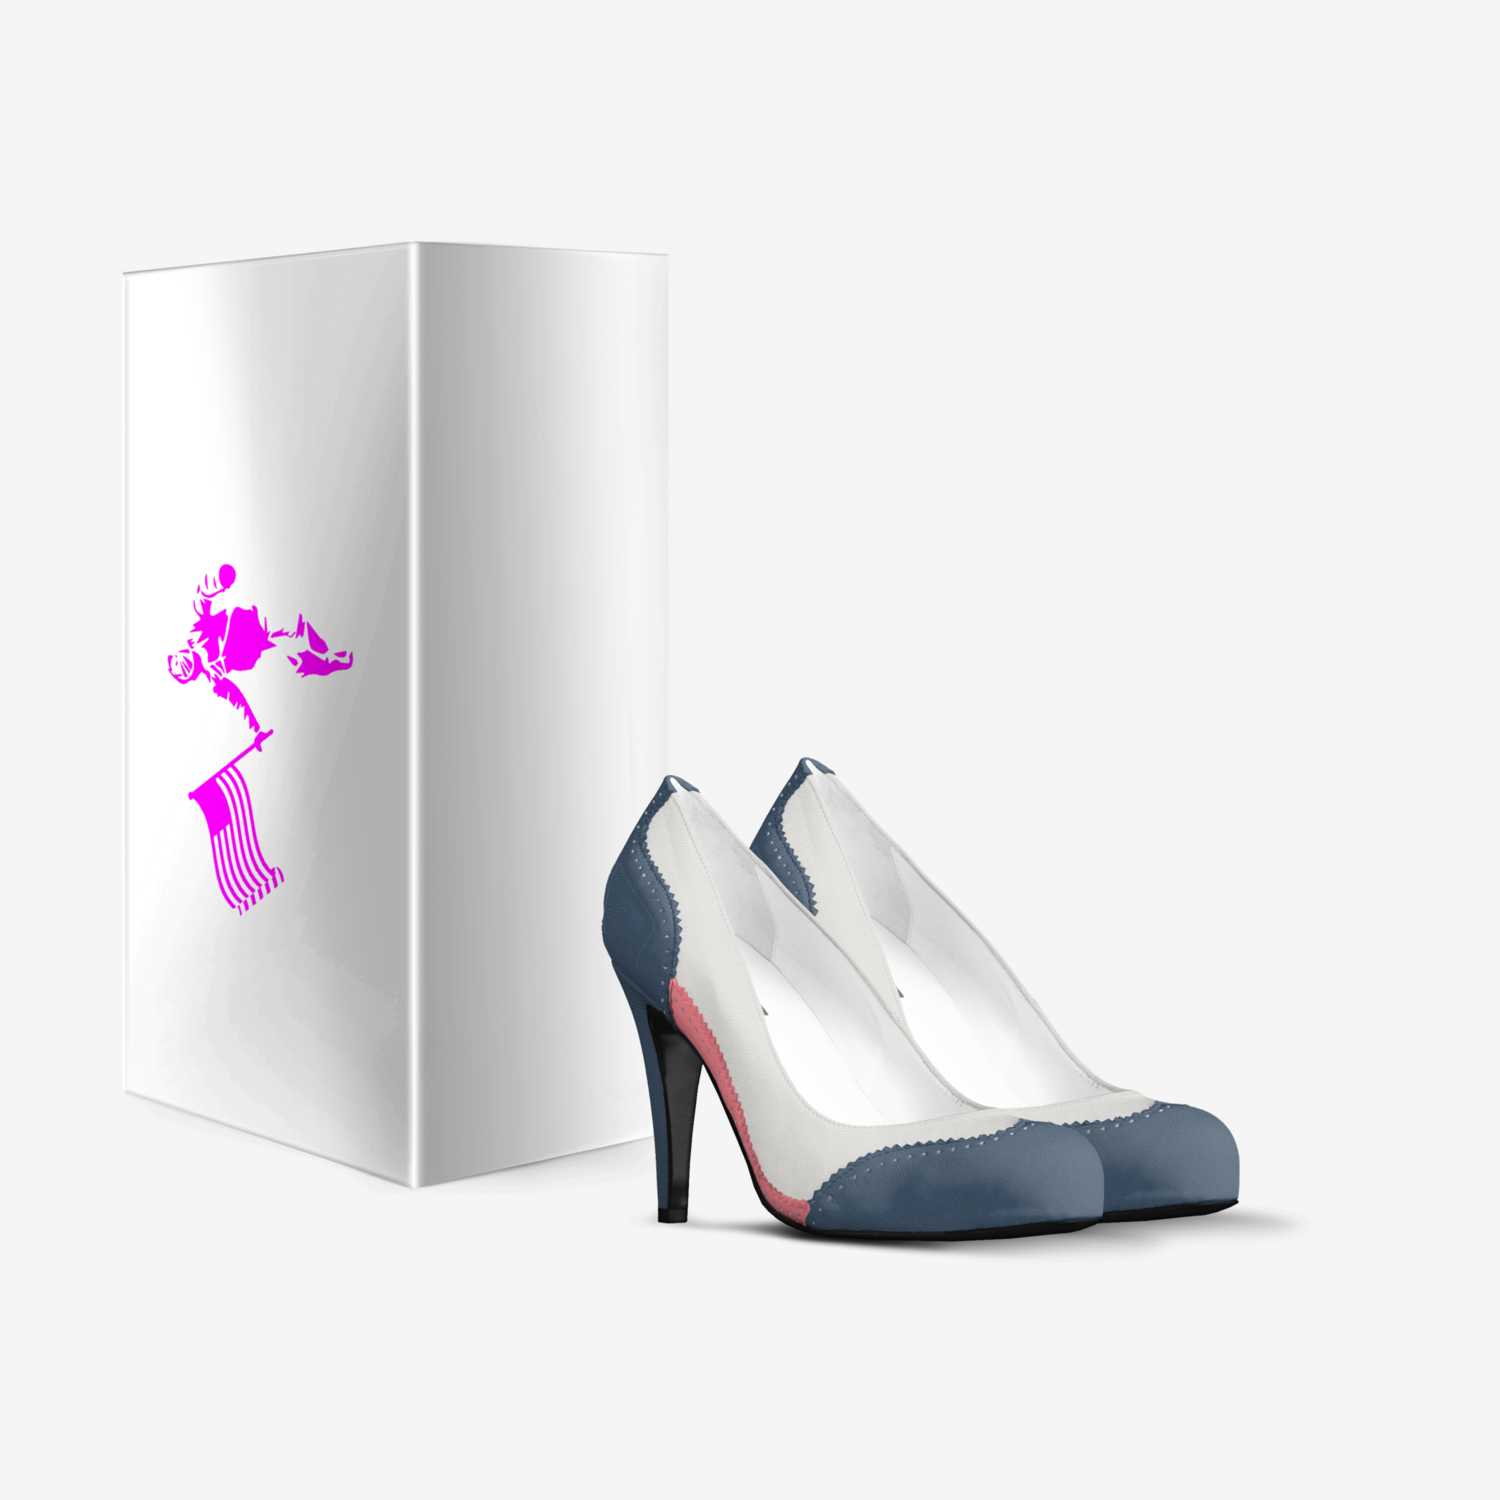 Billie K custom made in Italy shoes by Kerosene Bill | Box view